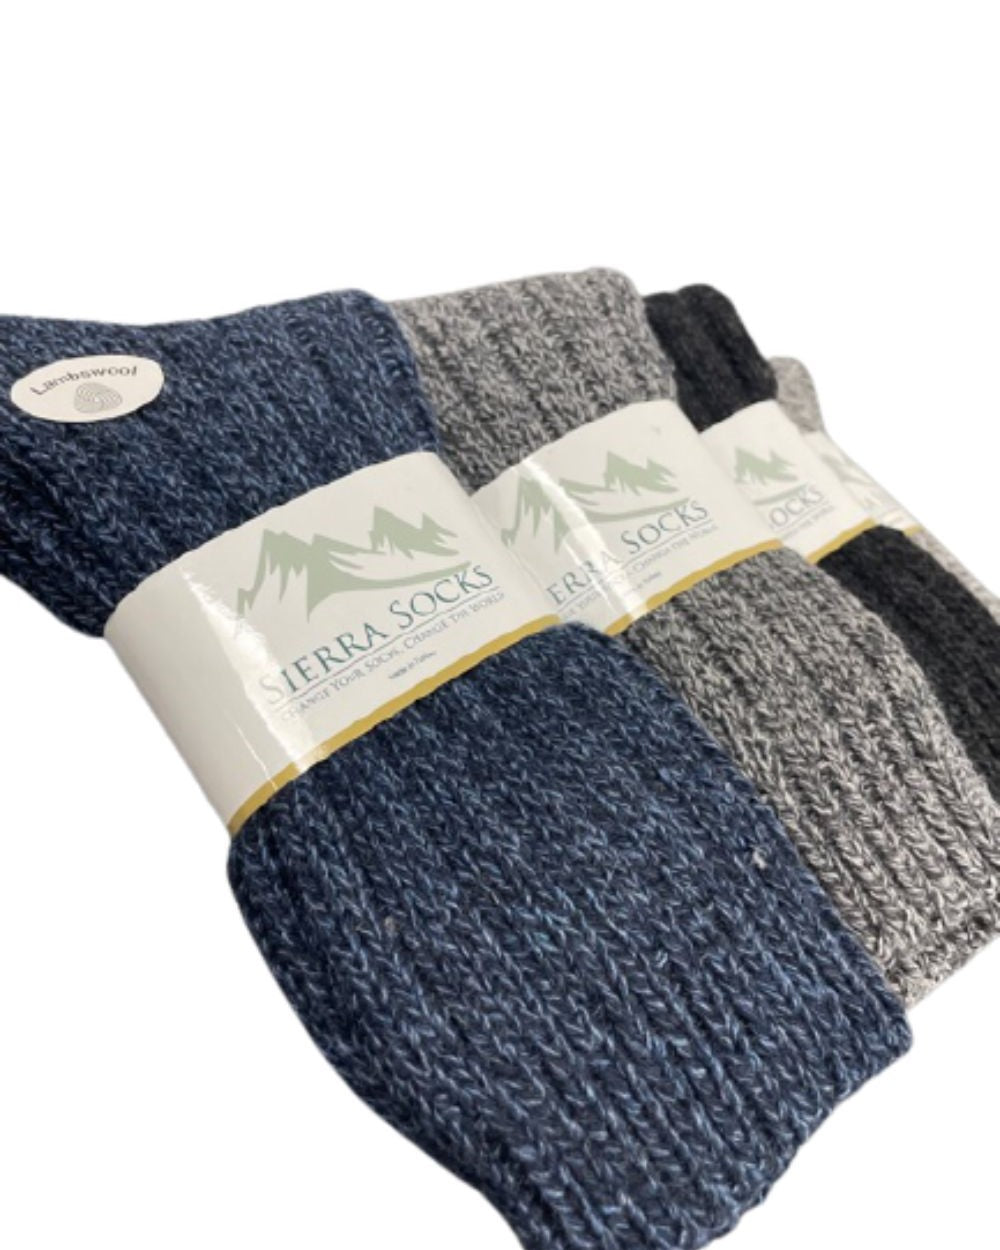 Regenerated/Eco-Friendly Wool Sock